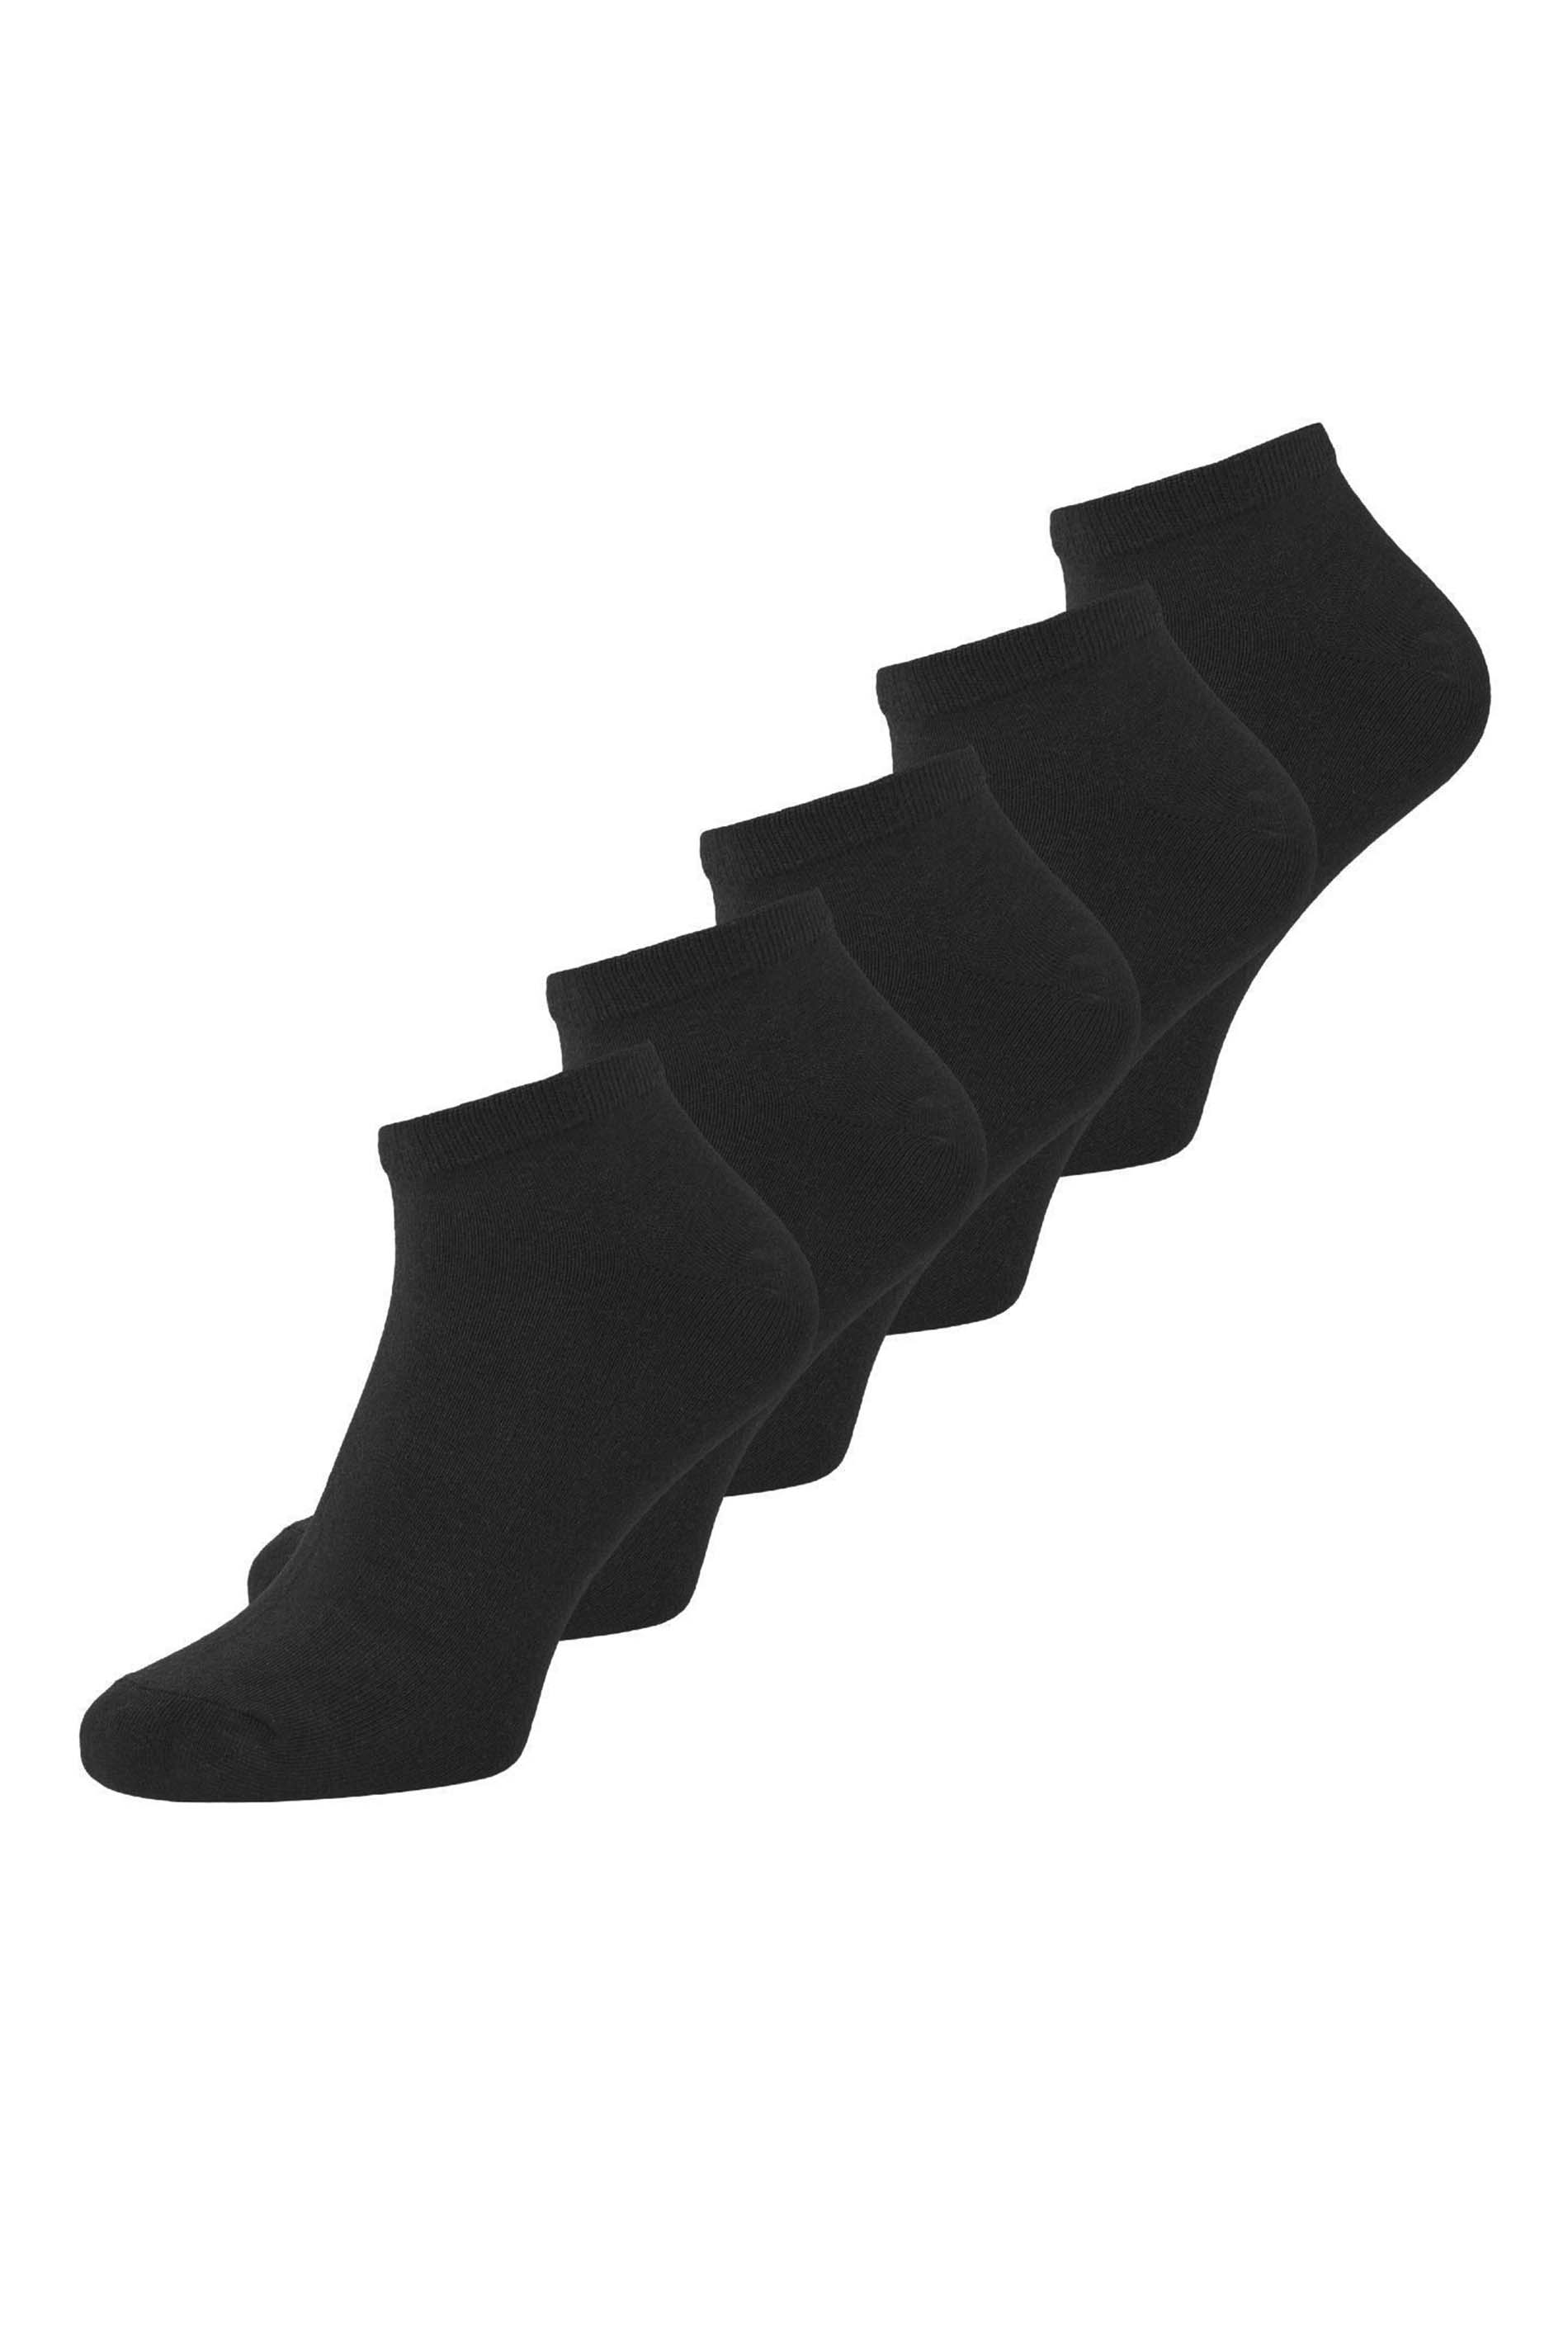 JACK & JONES 5 PACK Black Trainer Socks | BadRhino 1